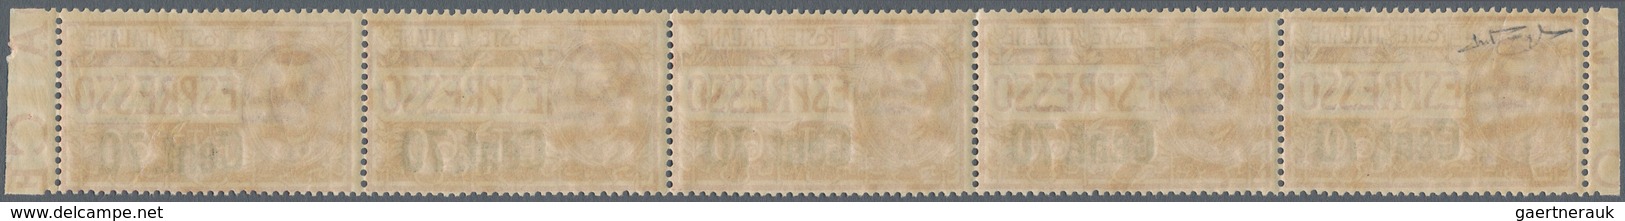 Italien: 1925, Express Stamp 70 Cents On 60 Cents, Carmine With Slanting Overprint, Horizontal Strip - Ongebruikt